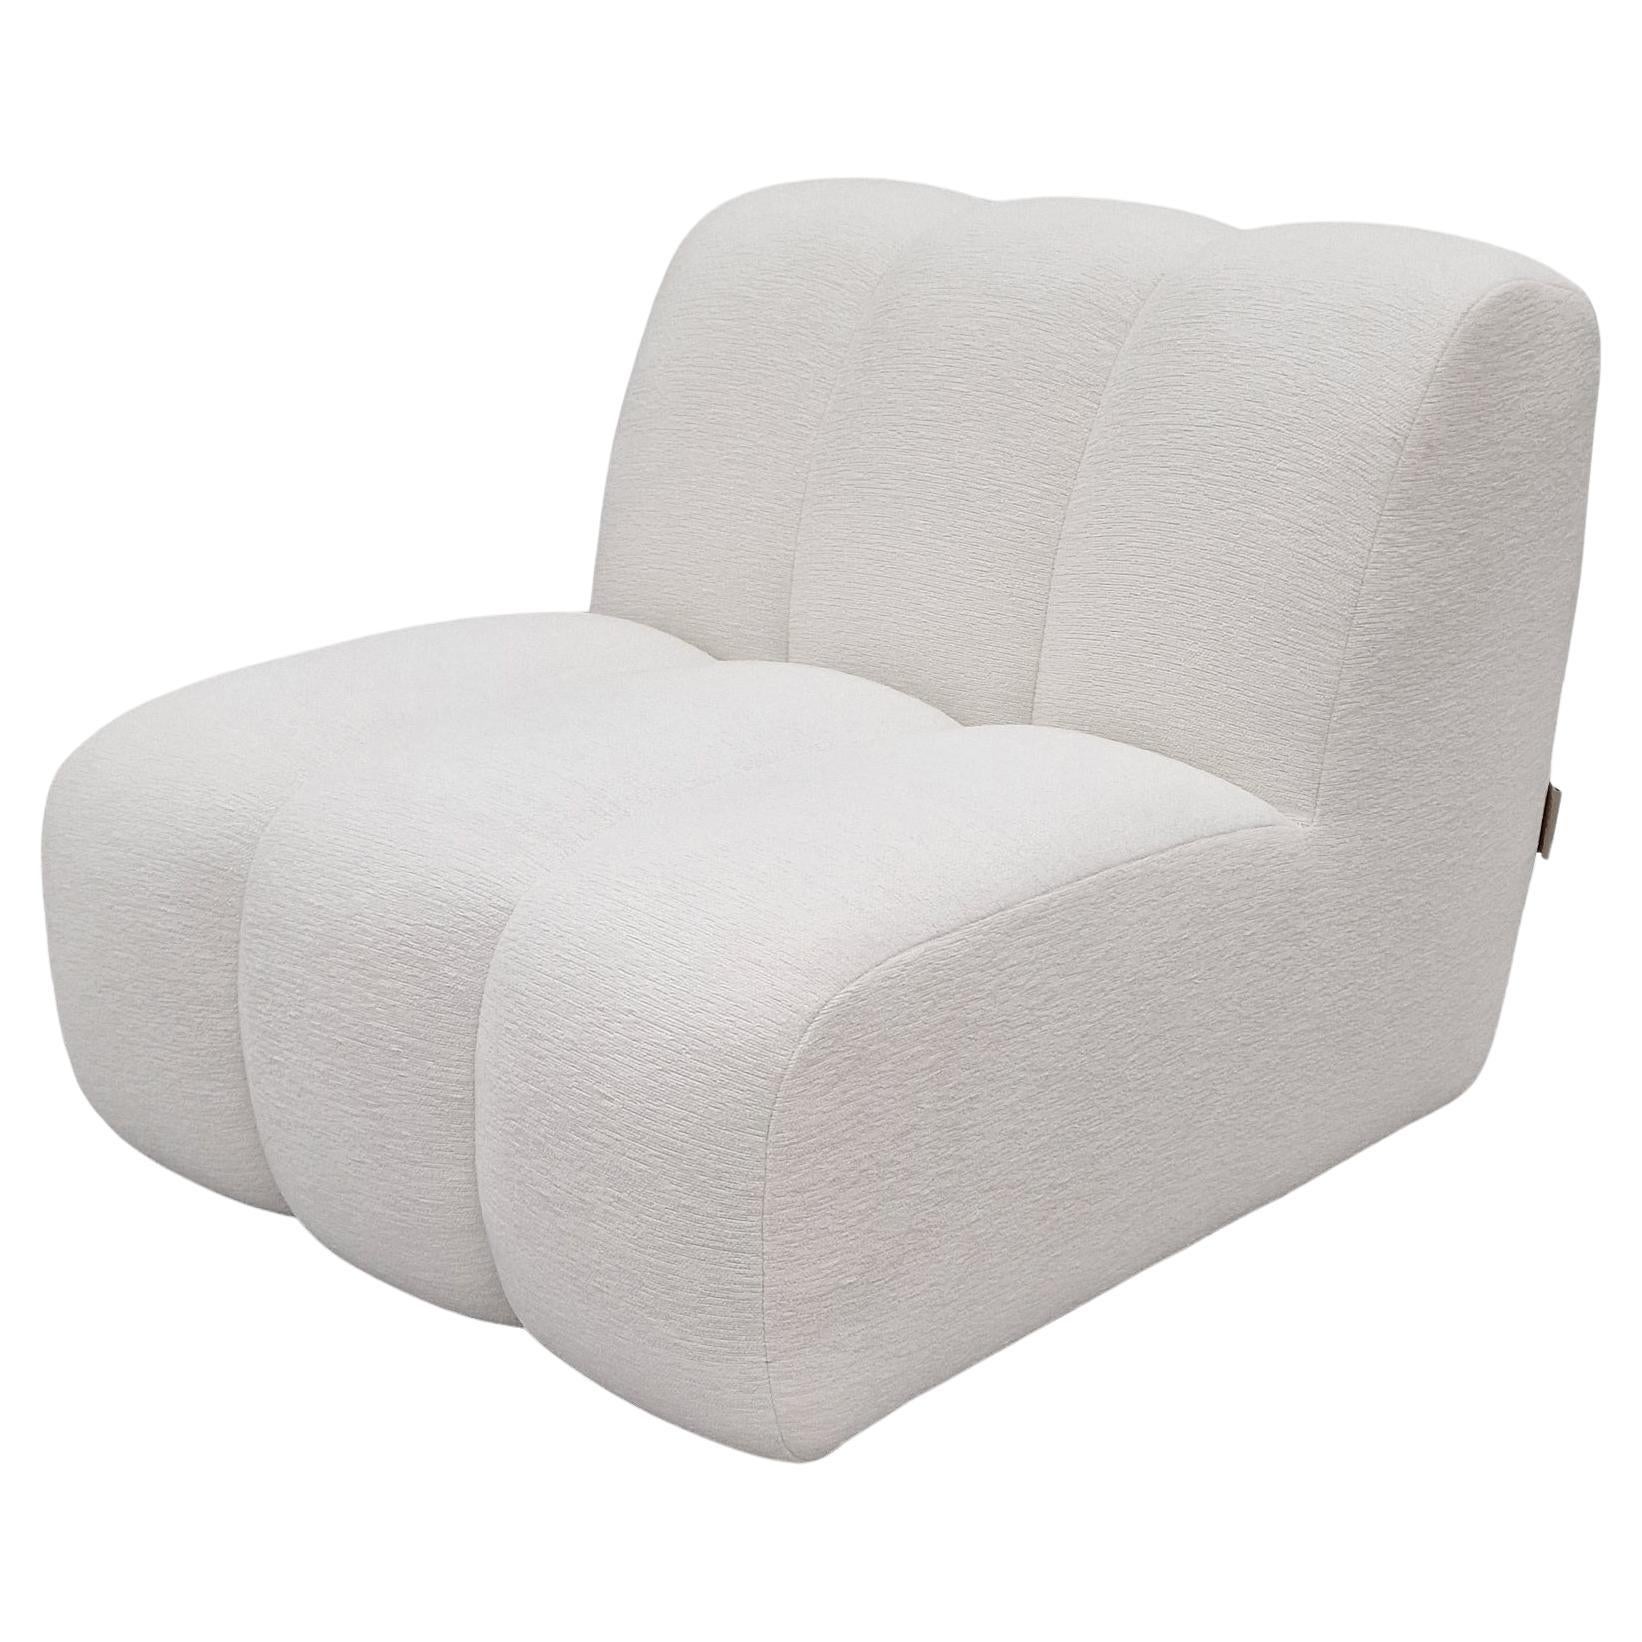 DACCAPO modular sofa by Legame Italia, in white fabric. Basic module. For Sale